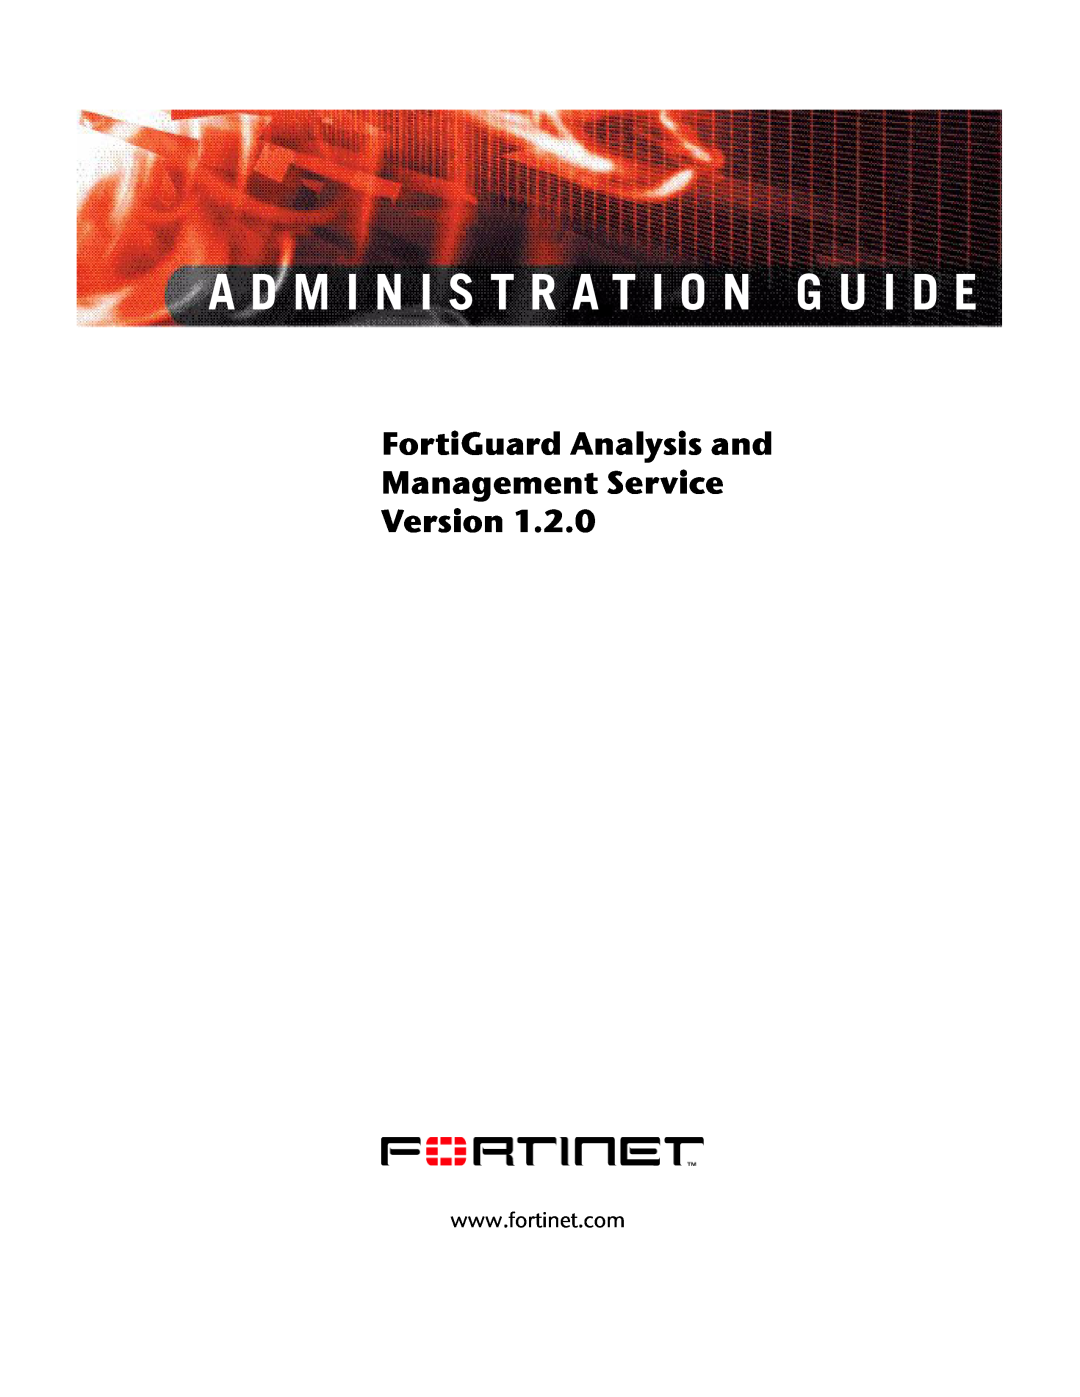 Fortinet 1.2.0 manual FortiGuard Analysis and Management Service Version, A D M I N I S T R A T I O N G U I D E 